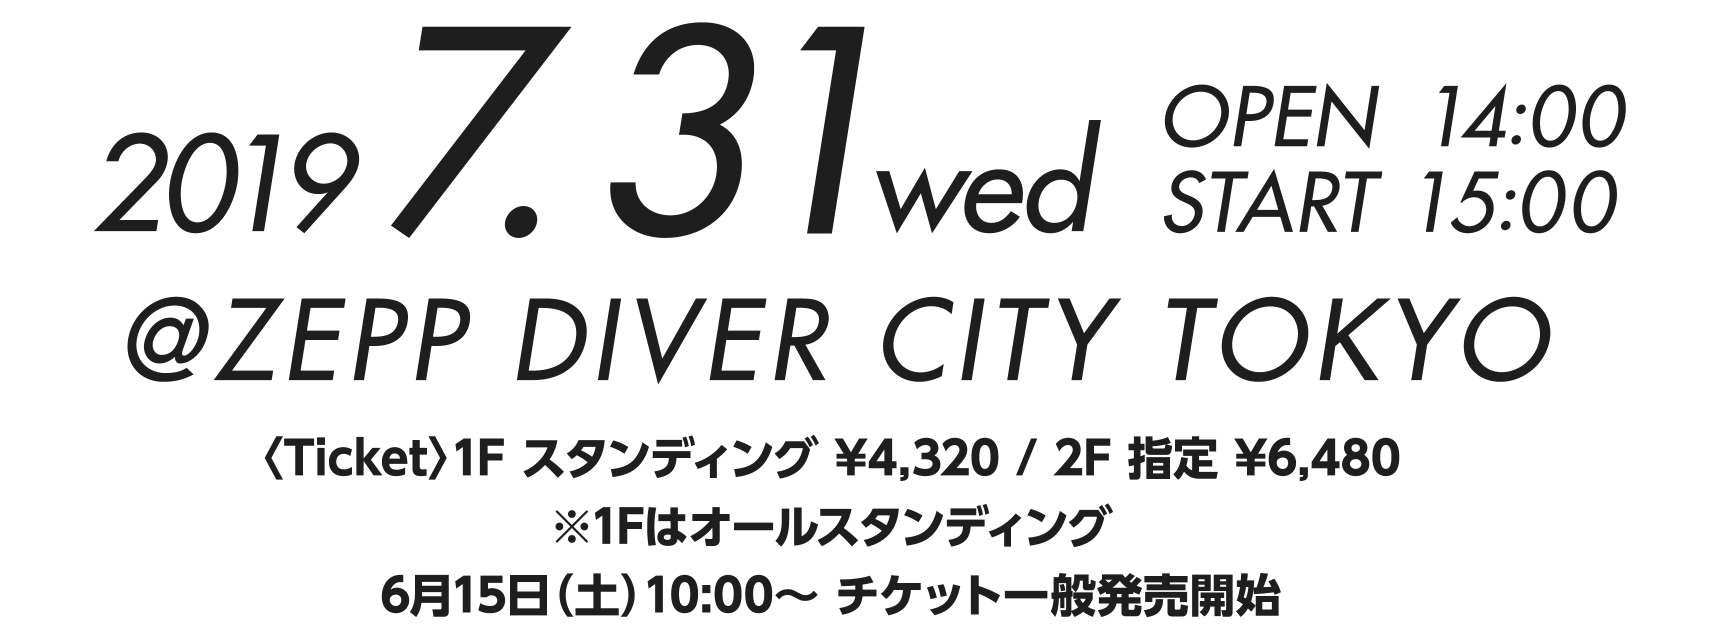 2019.7.31(wed)@ZEPP DIVER CITY TOKYO〈Ticket〉1F スタンディング ¥4,320 / 2F 指定 ¥6,480※1Fはオールスタンディング6月15日（土）10:00〜 チケット一般発売開始